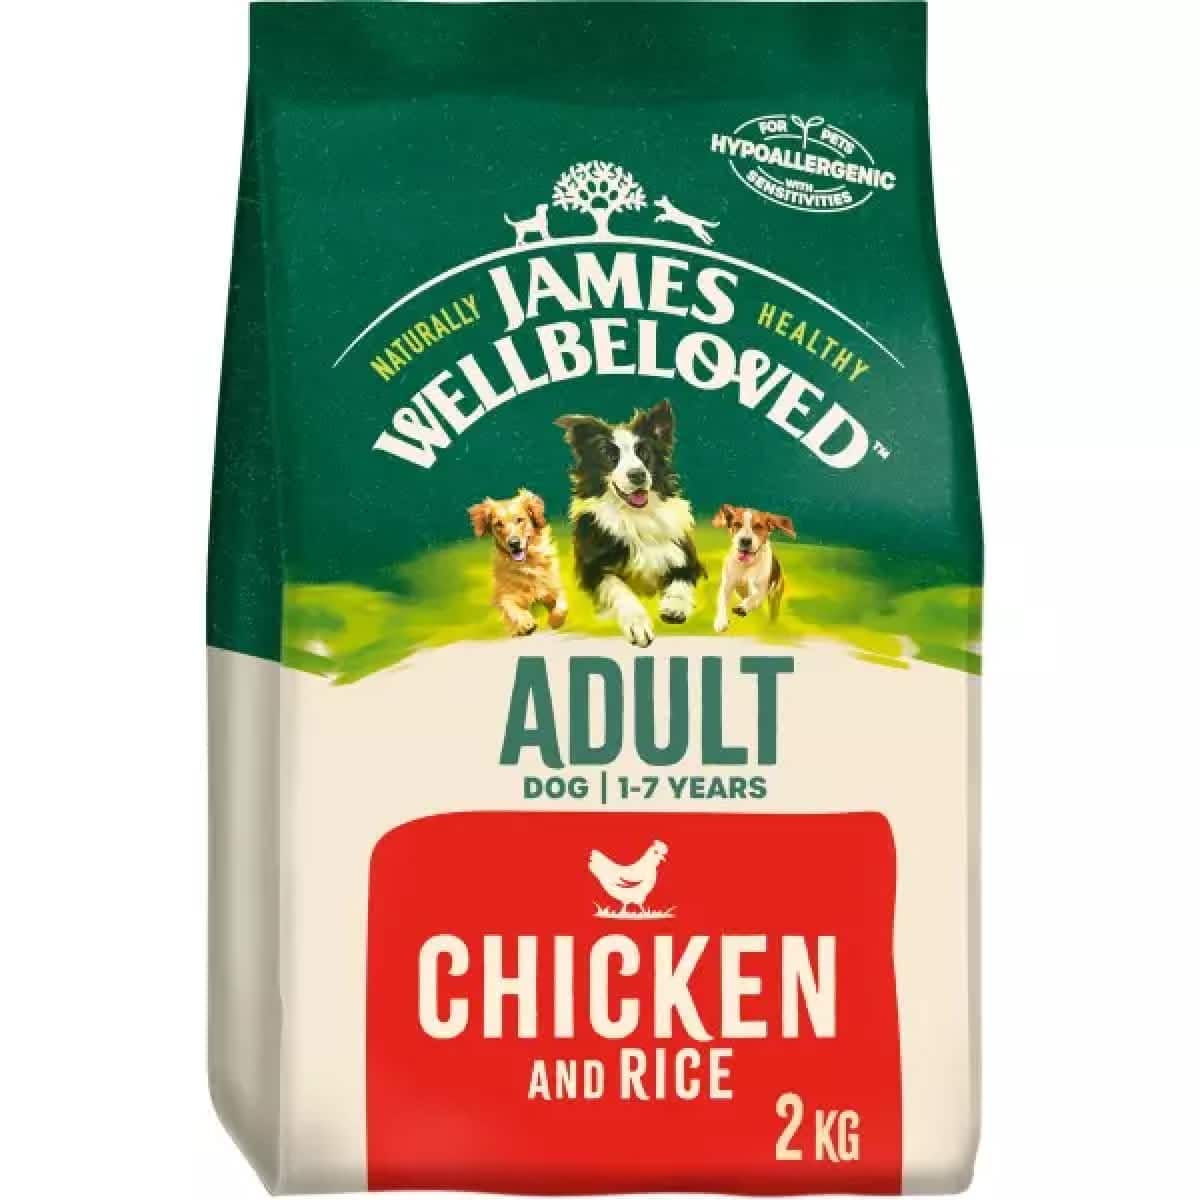 James Wellbeloved - Adult Chicken 2kg Main Image